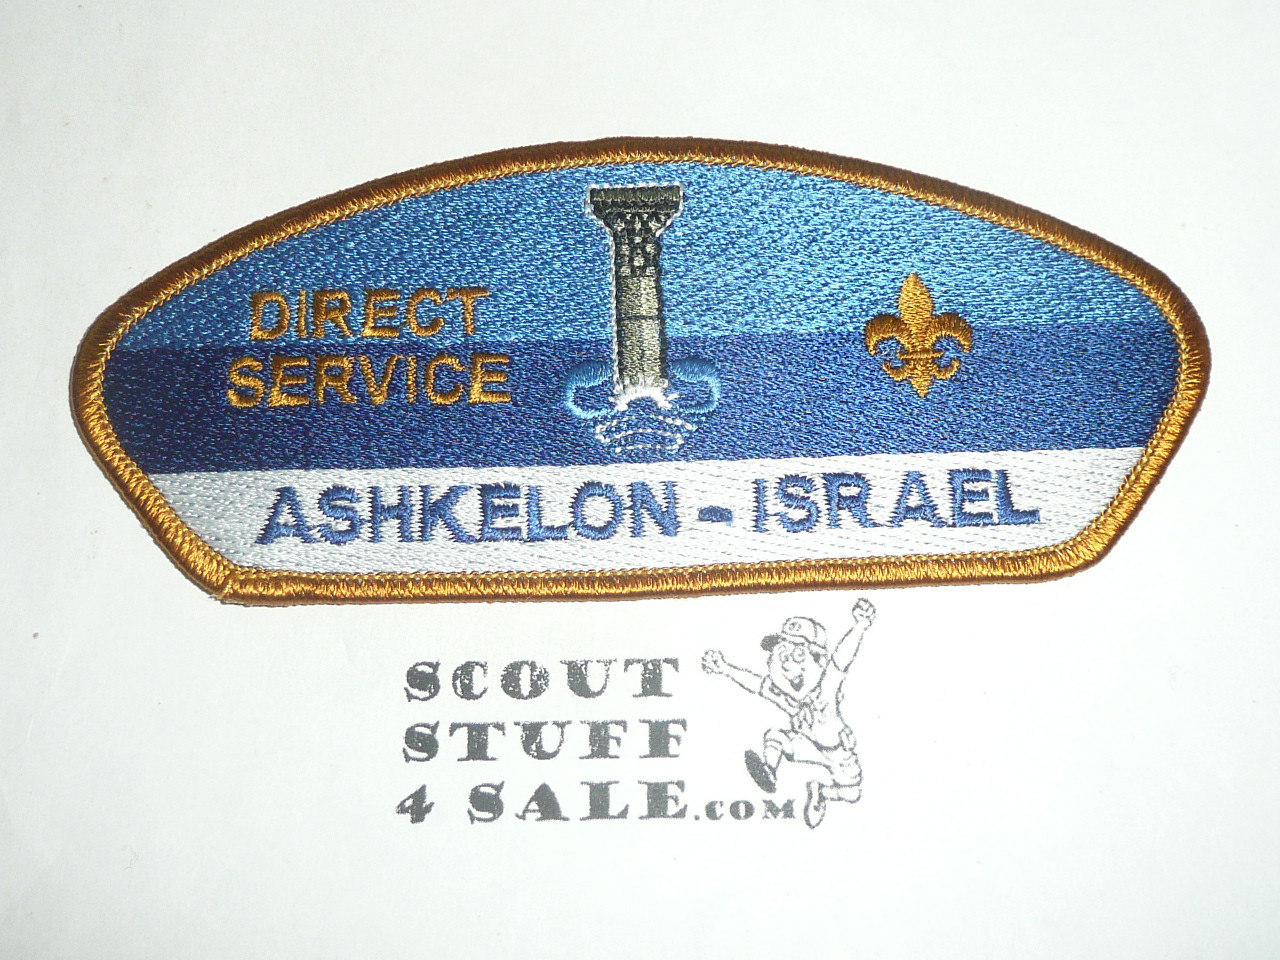 Direct Service Council ISRAEL s1 CSP - Scout